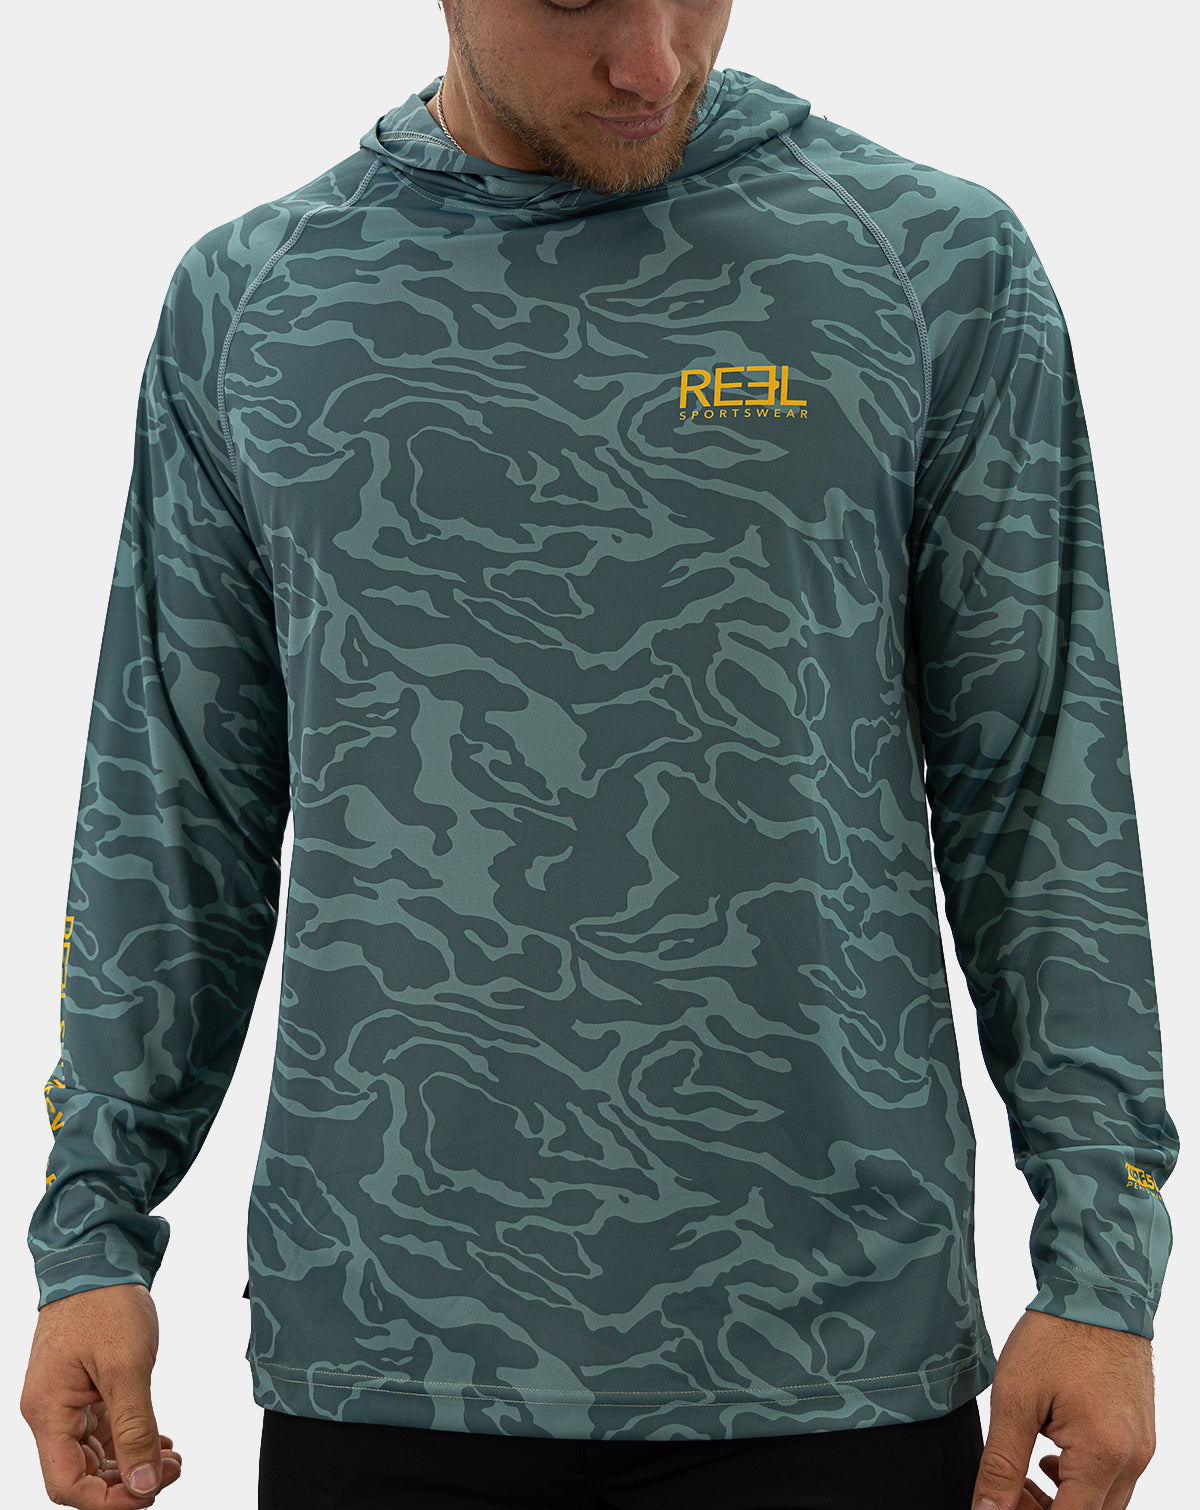 Boys Reel Legends Lightweight Blue Marled Long Sleeve Hooded Fishing Shirt  Top 